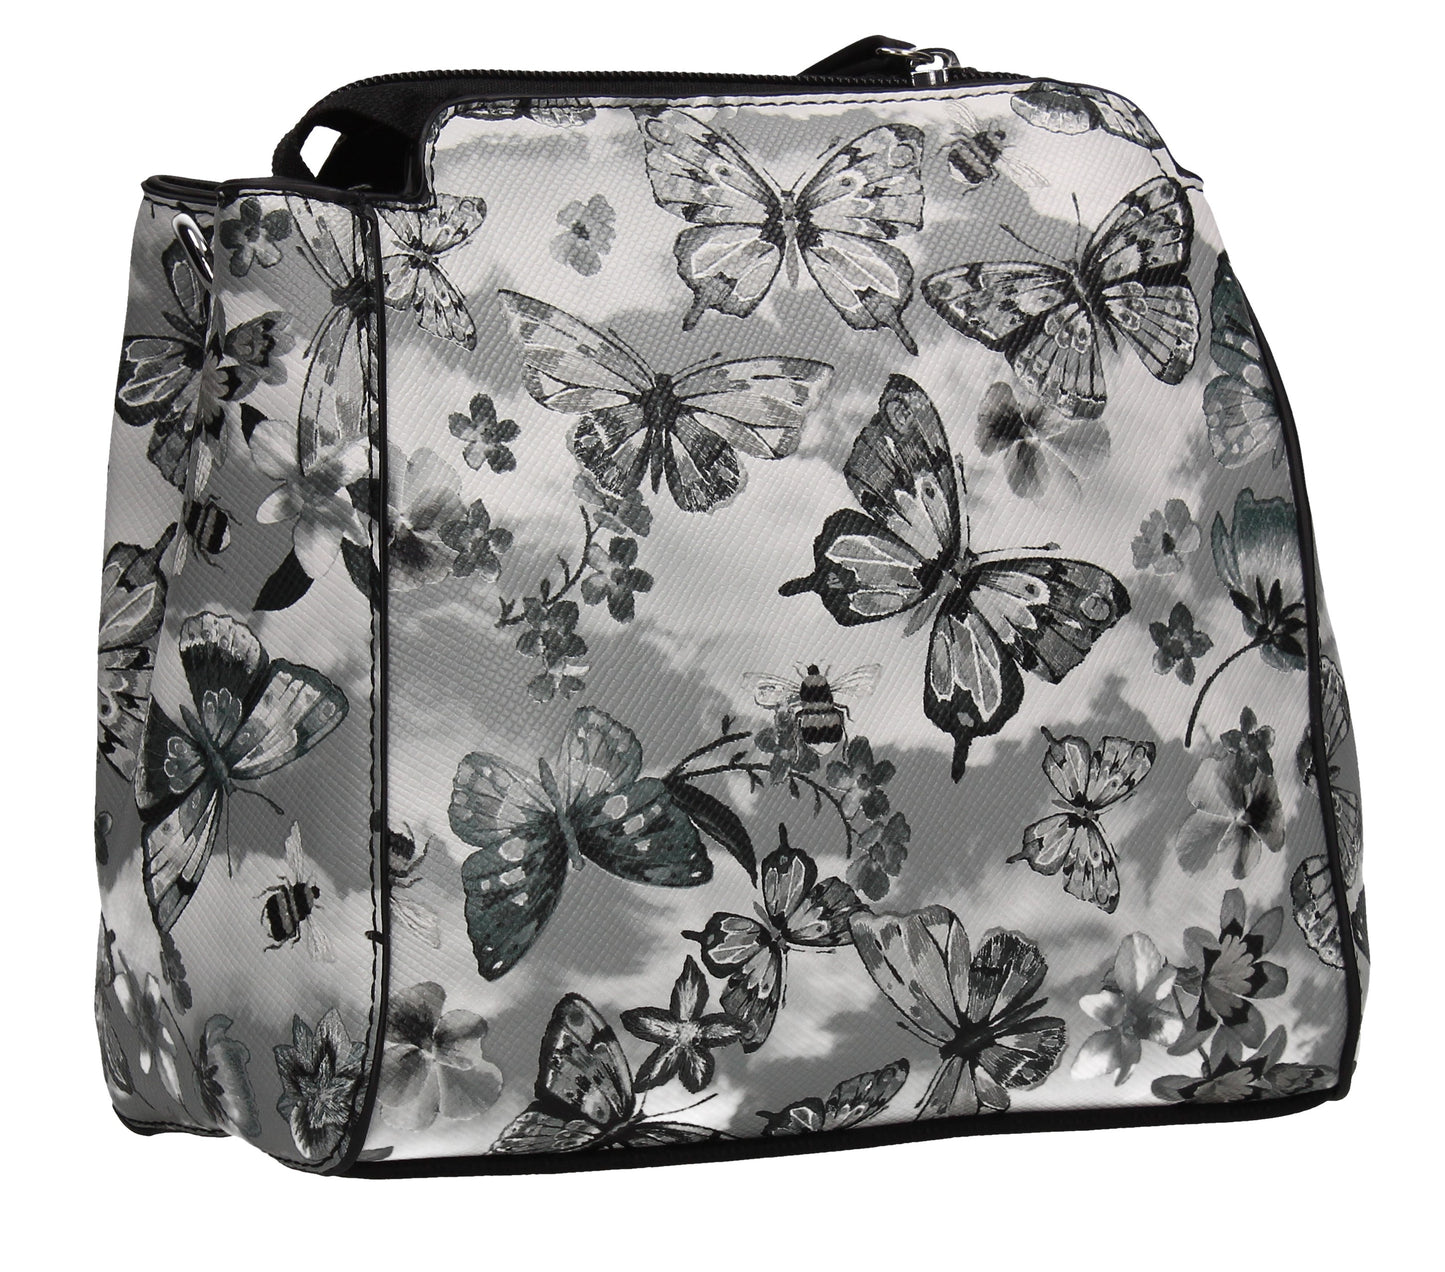 Anita Butterfly Handbag BlackBeautiful Cute Animal Faux Leather Clutch Bag Handles Strap Summer School